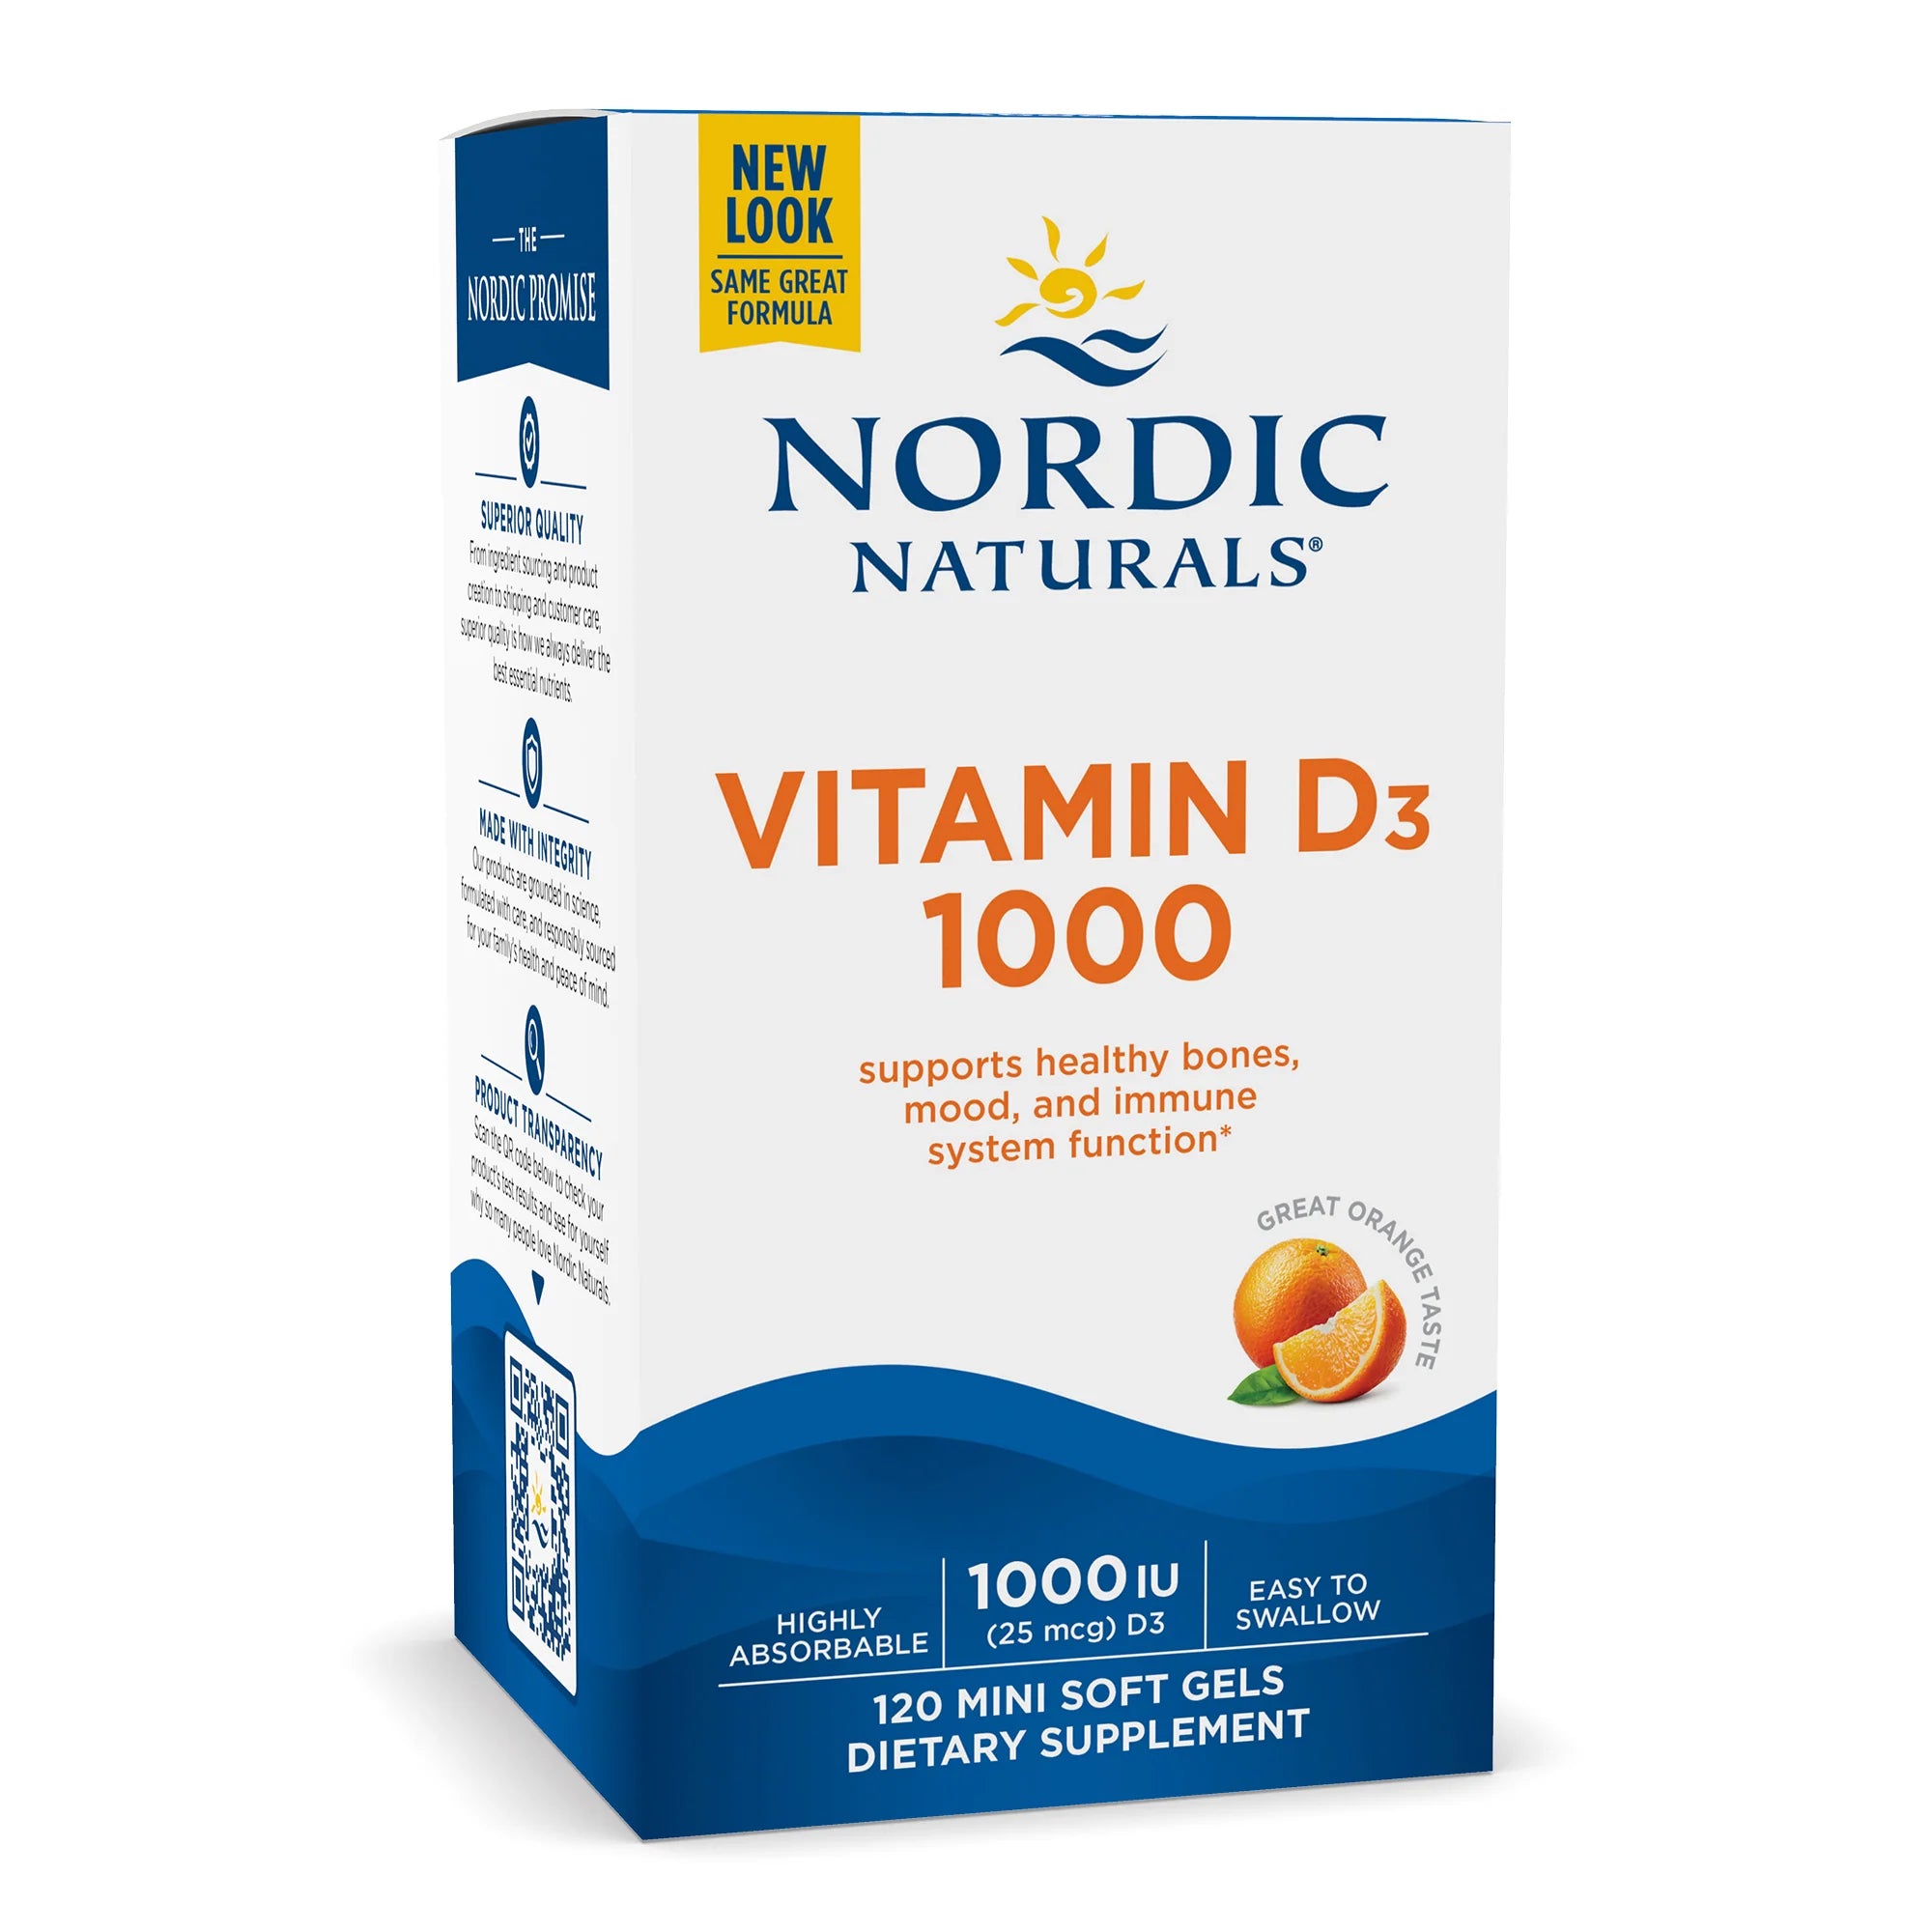 Vitamin D3 1000